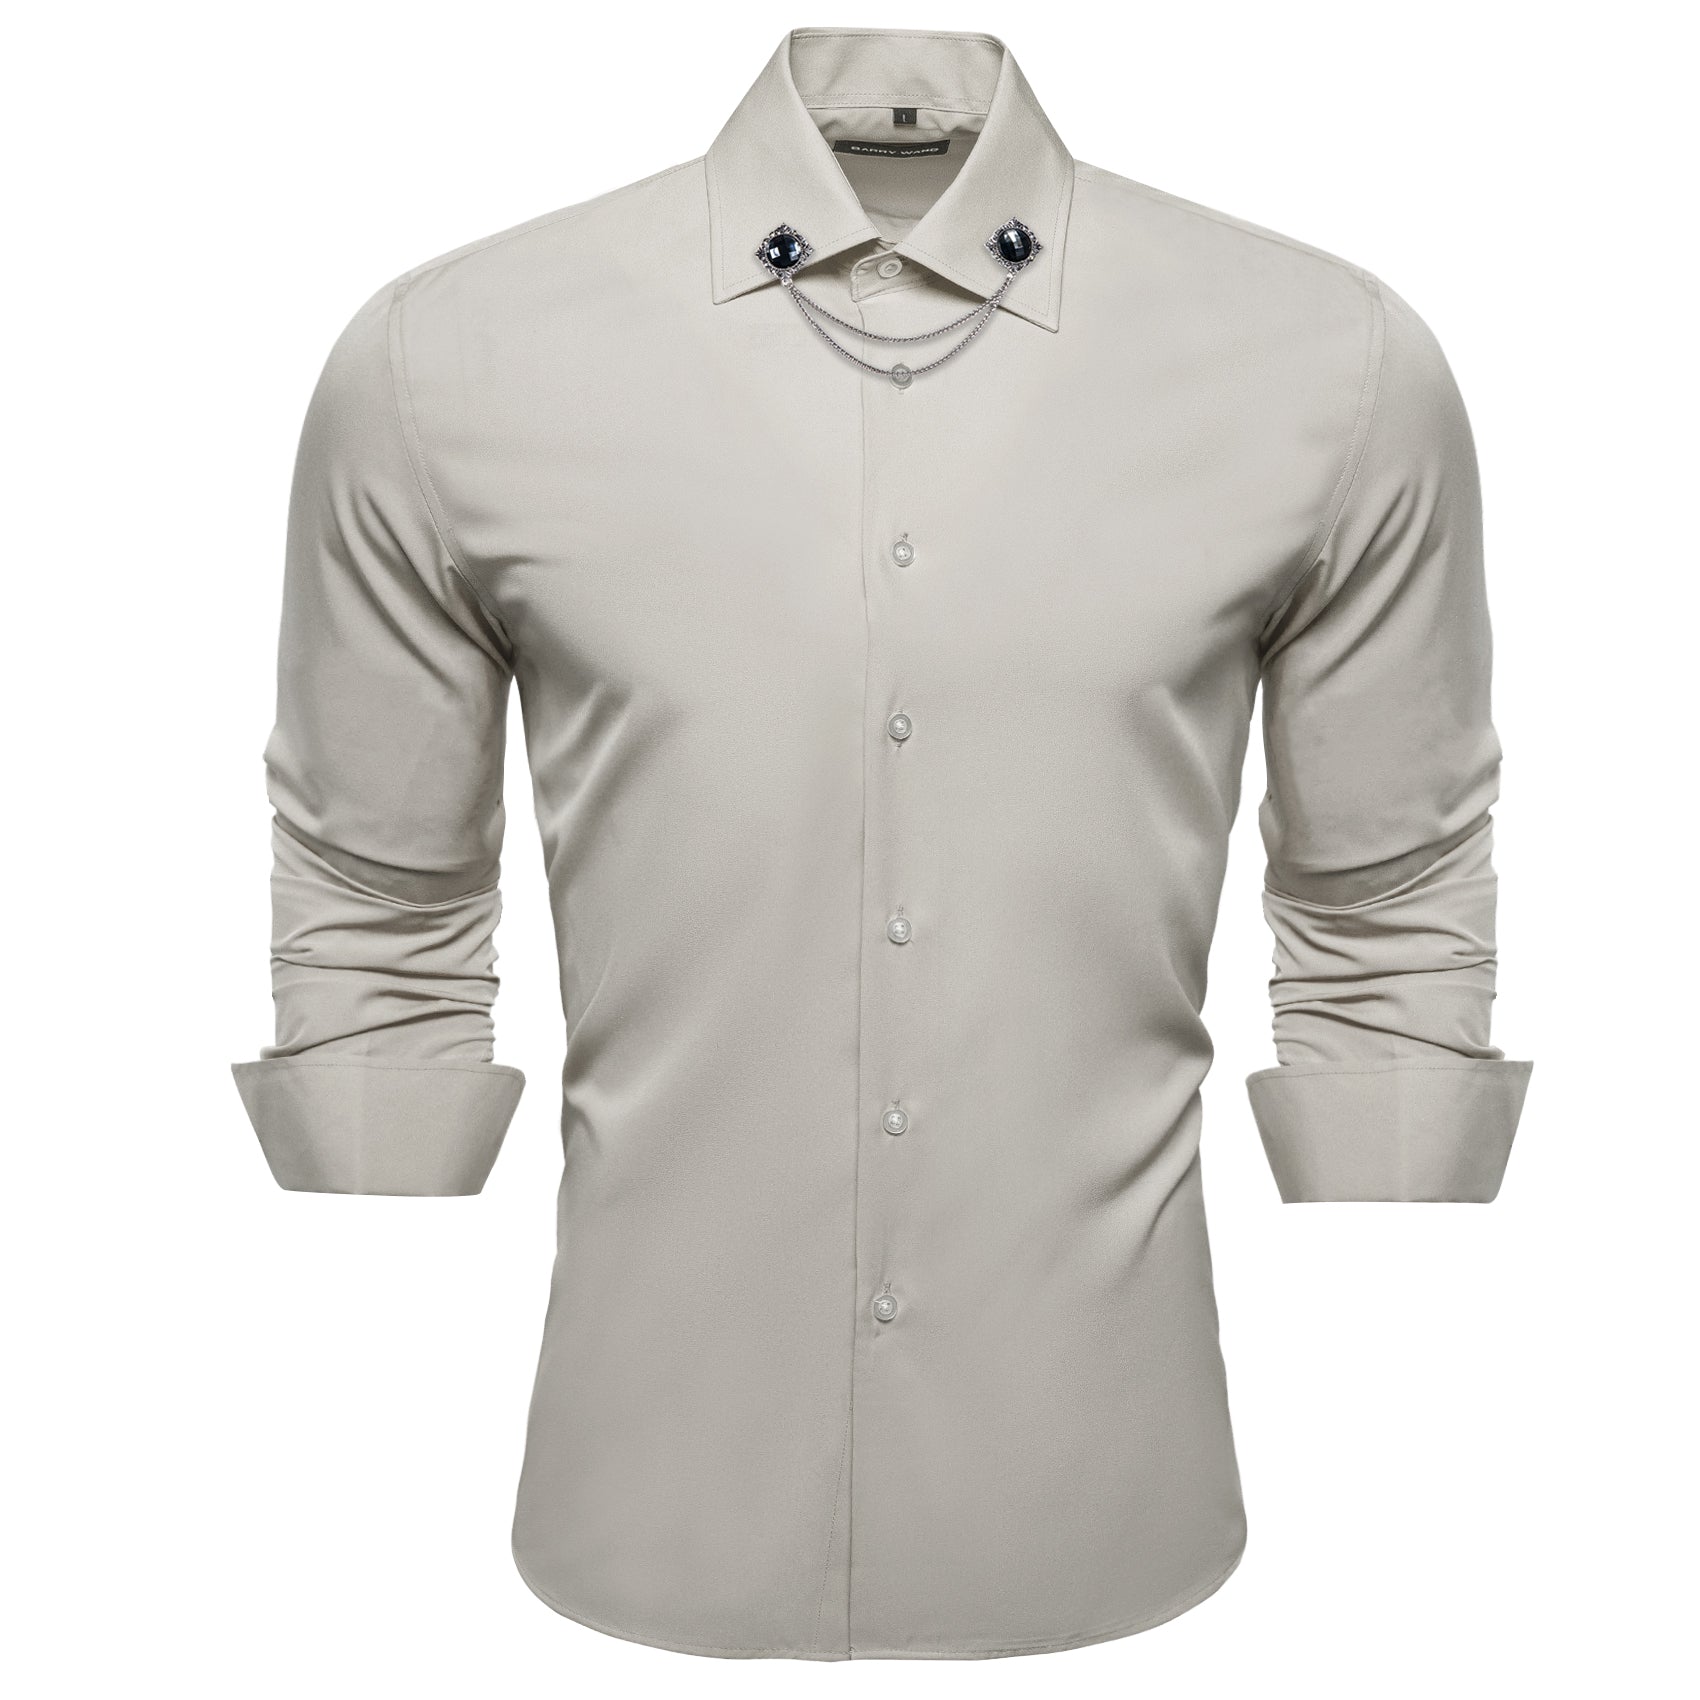 Barry.wang Light Grey Solid Silk Shirt with Collar Pin